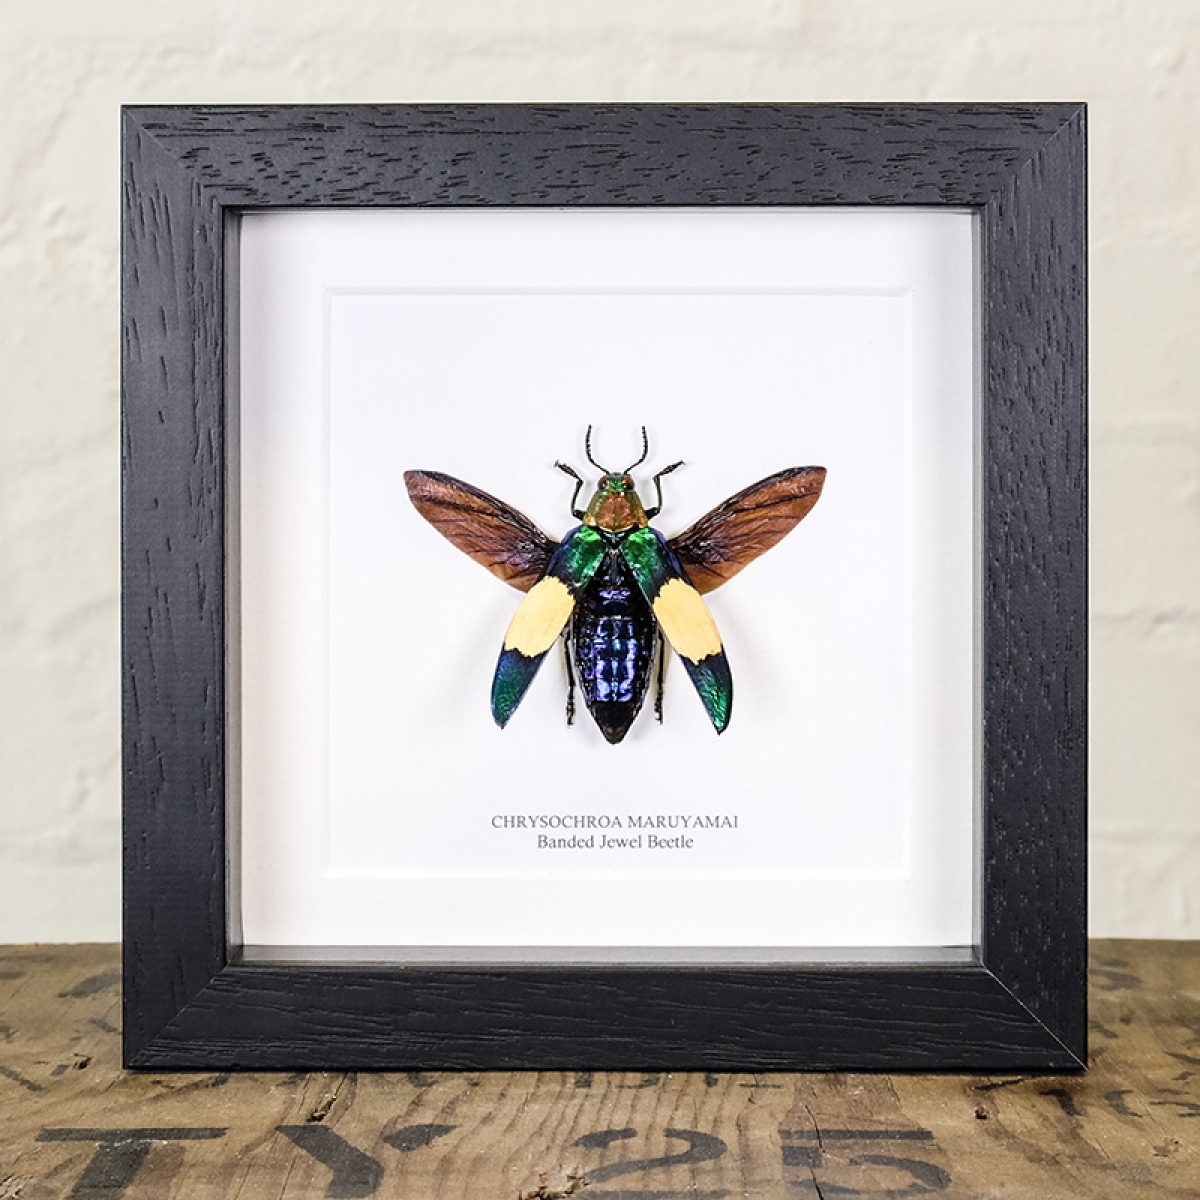 Minibeast Banded Jewel Beetle in Box Frame (Chrysochroa maruyamai)